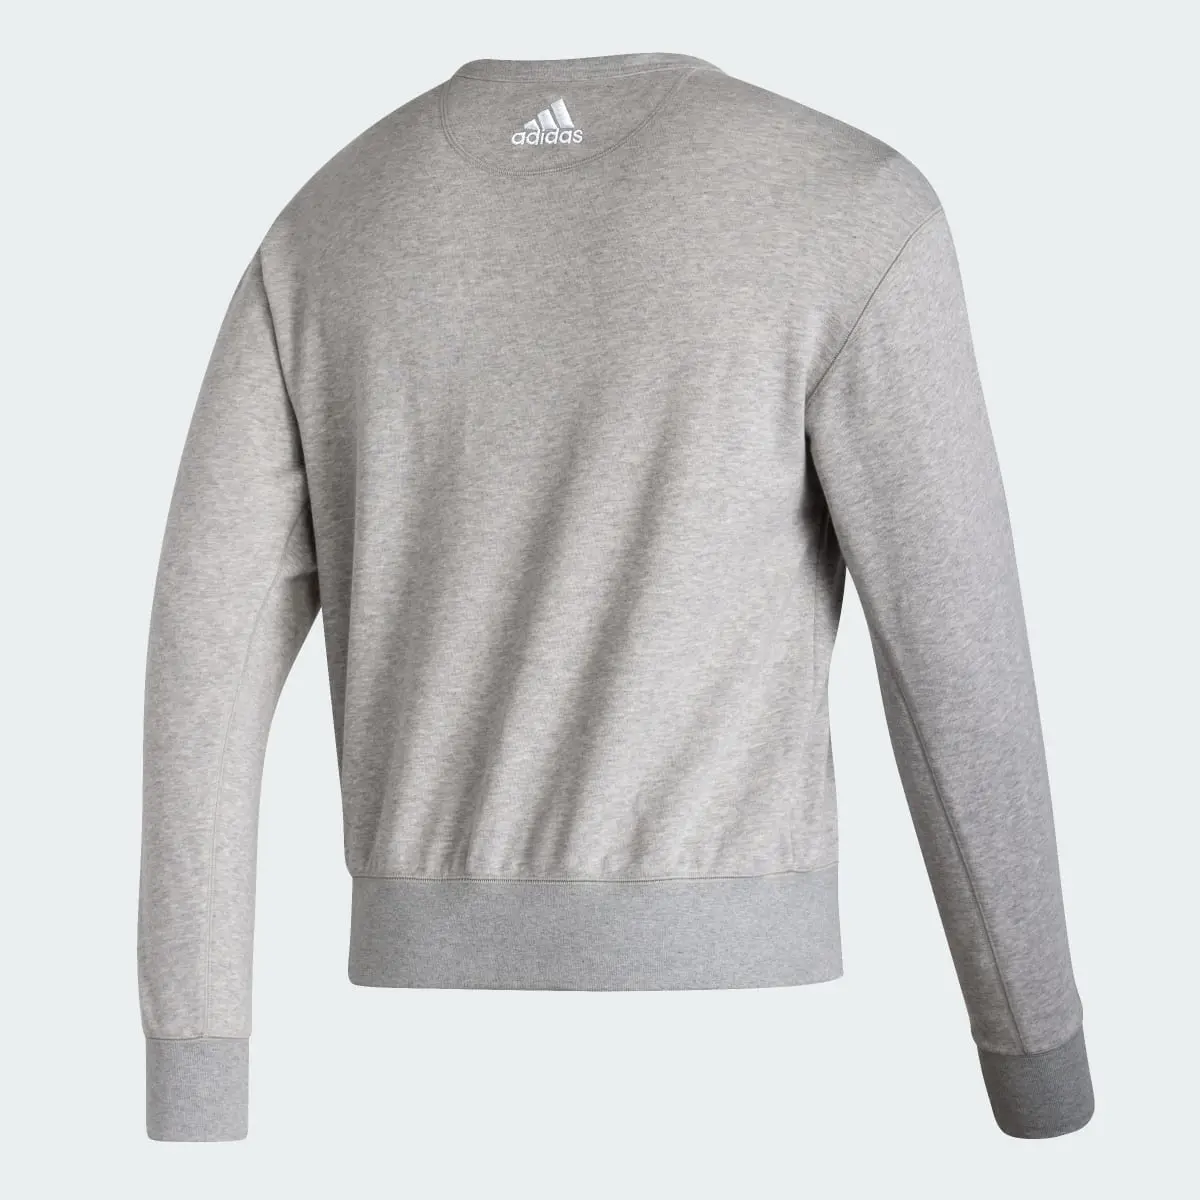 Adidas Nebraska Long Sleeve Sweatshirt. 2